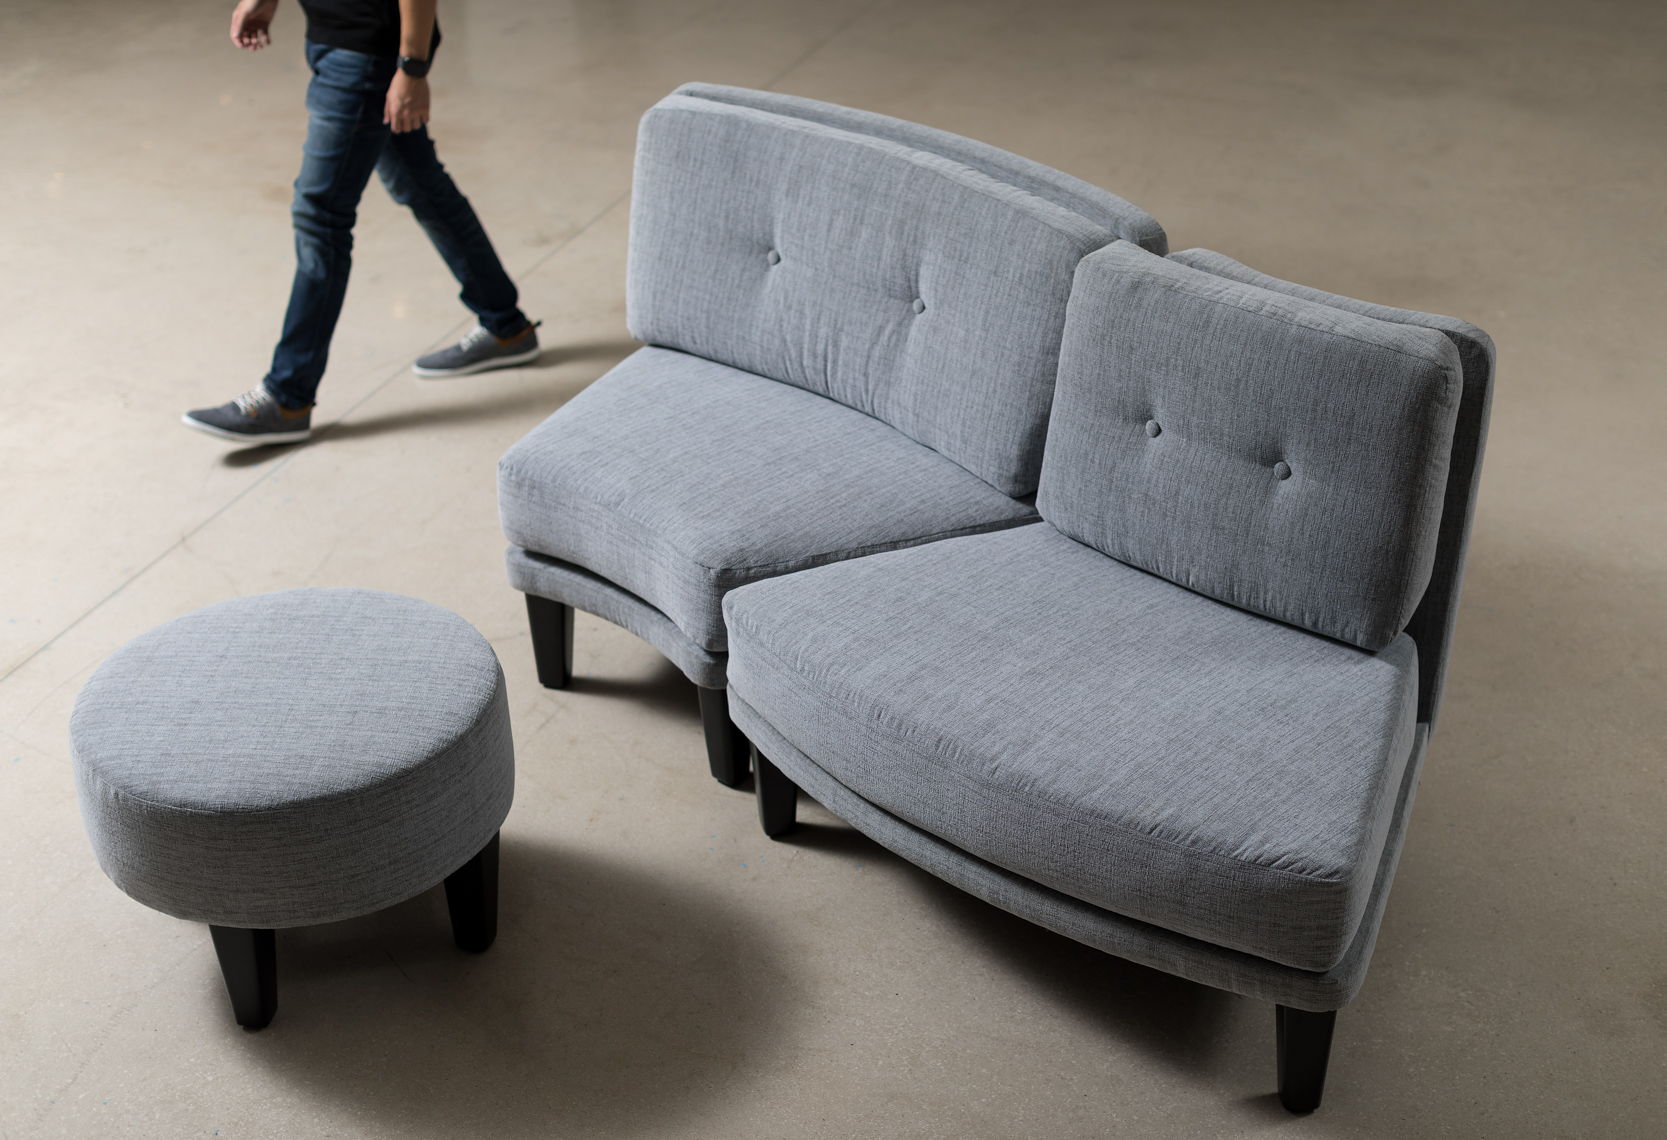 clear-design-office-sofa-product-jason-risner-photography